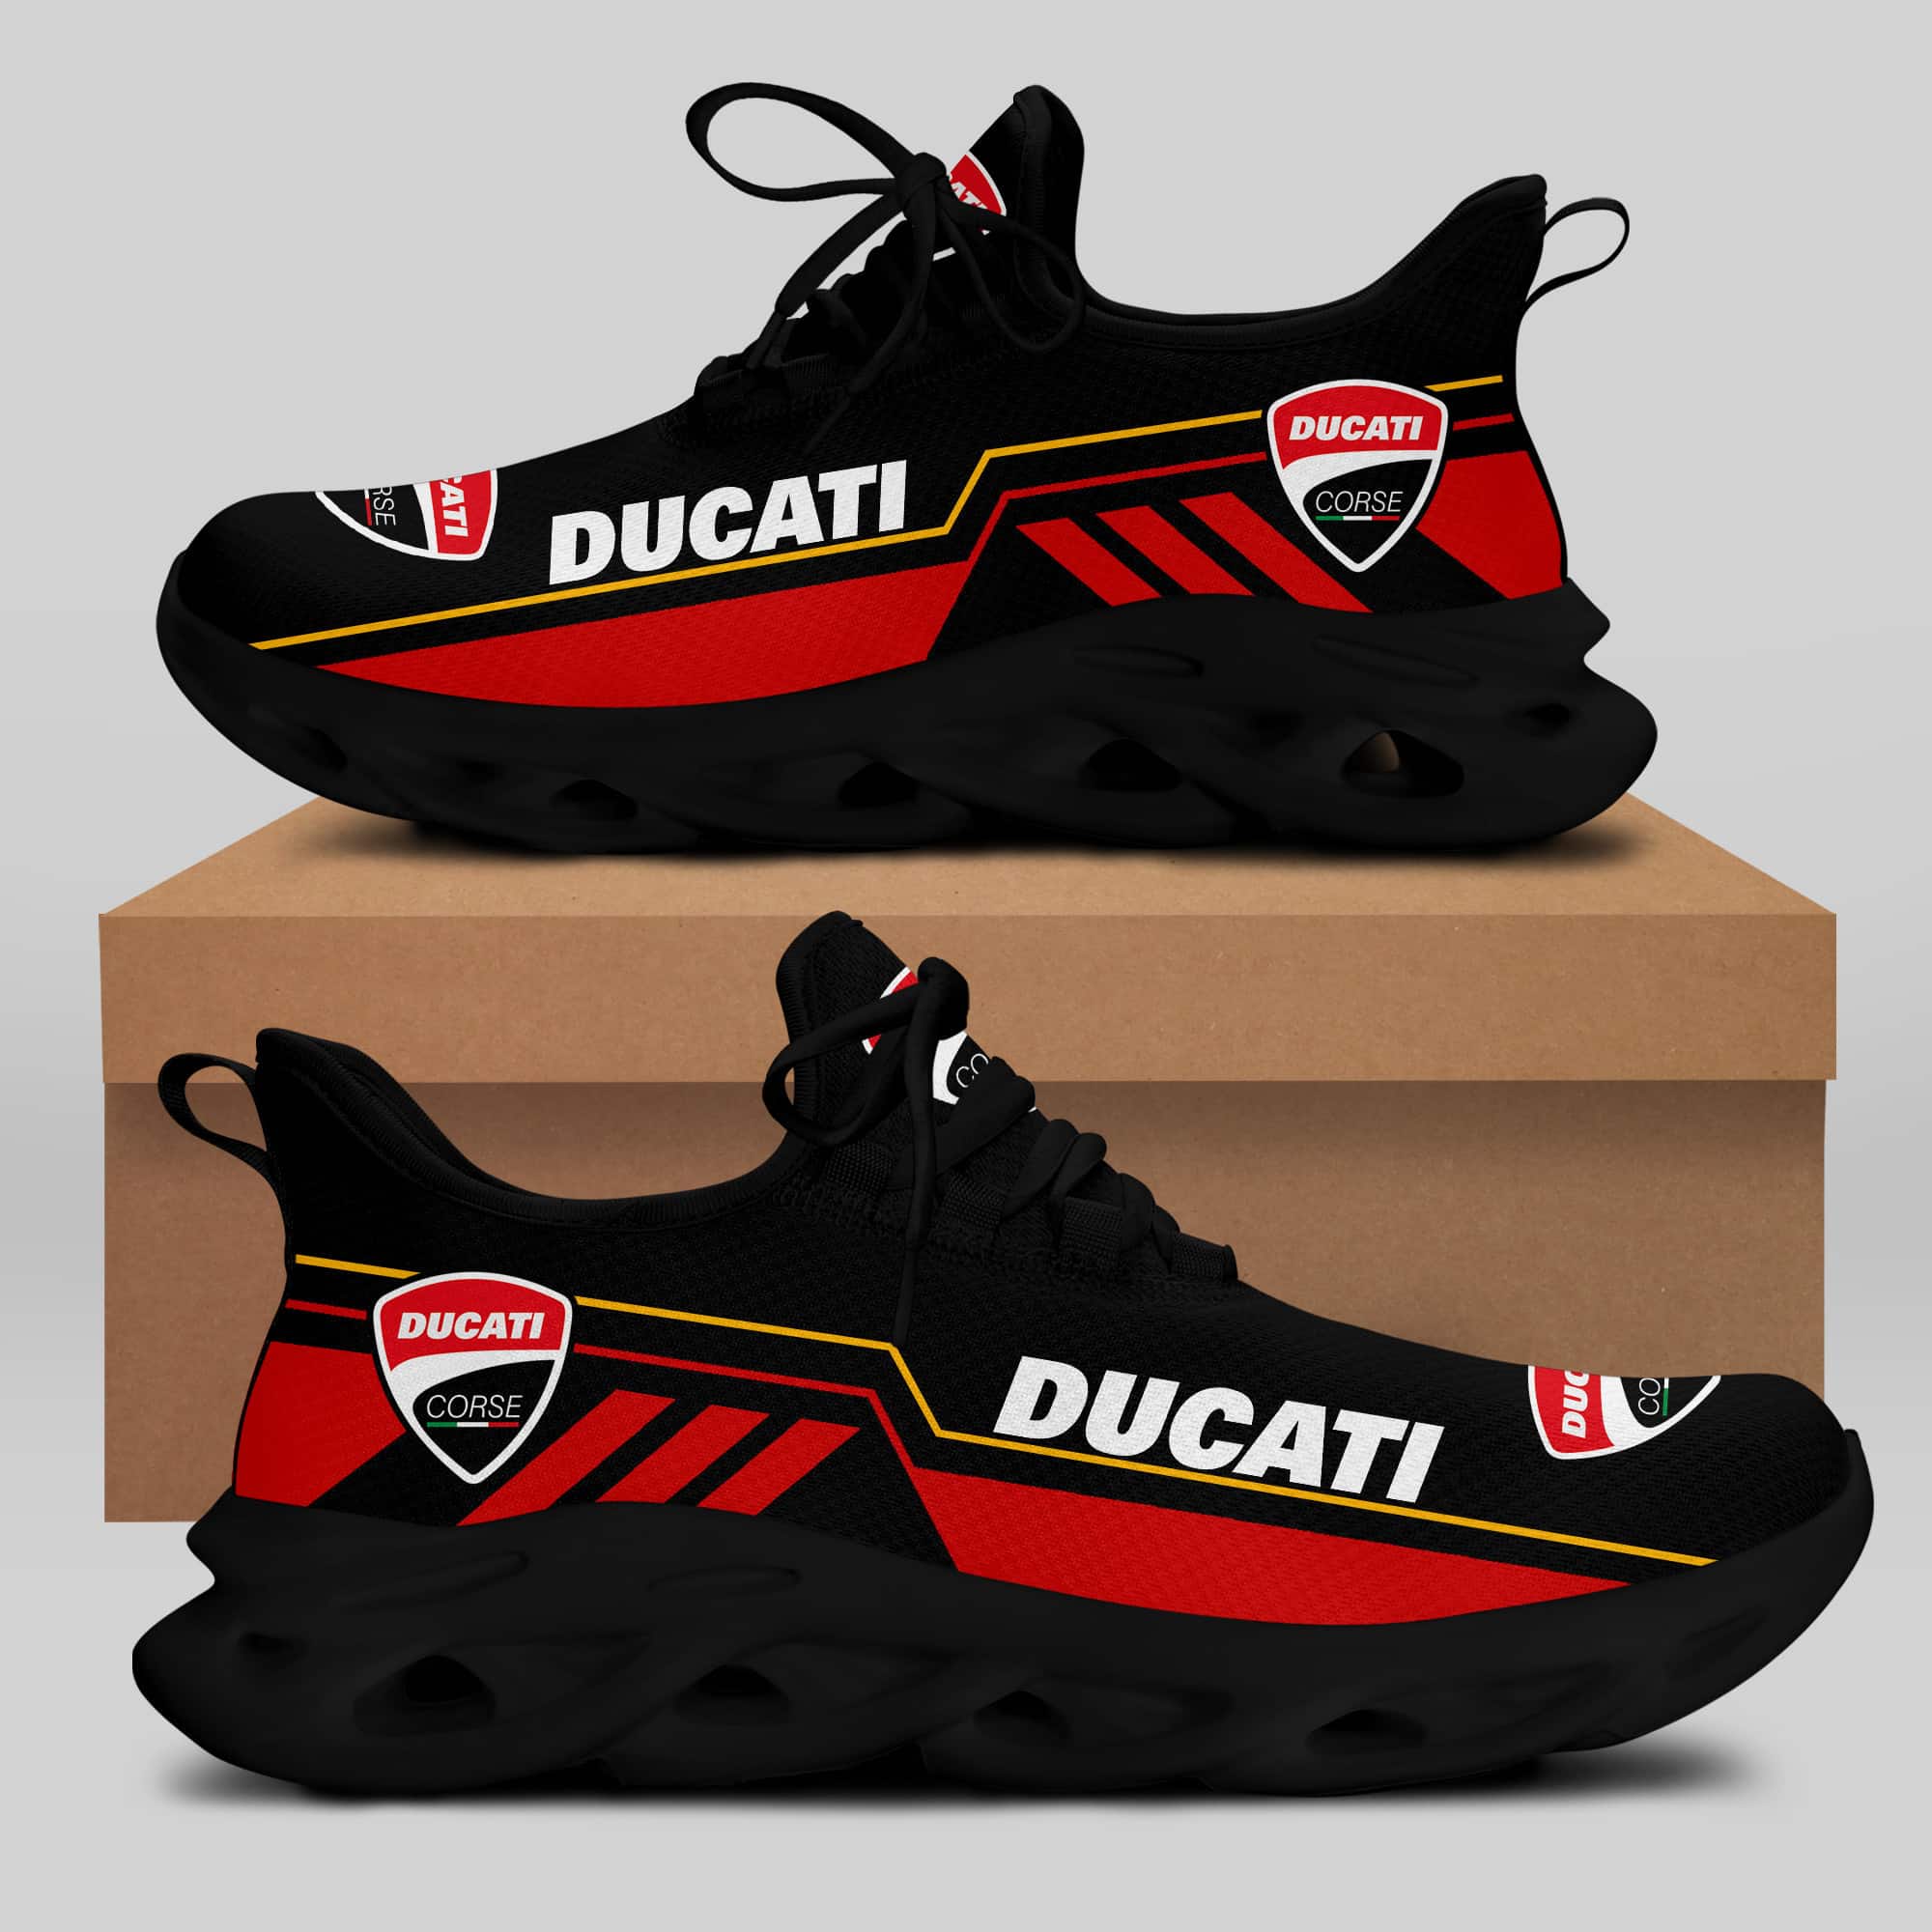 Ducati Racing Running Shoes Max Soul Shoes Sneakers Ver 19 1